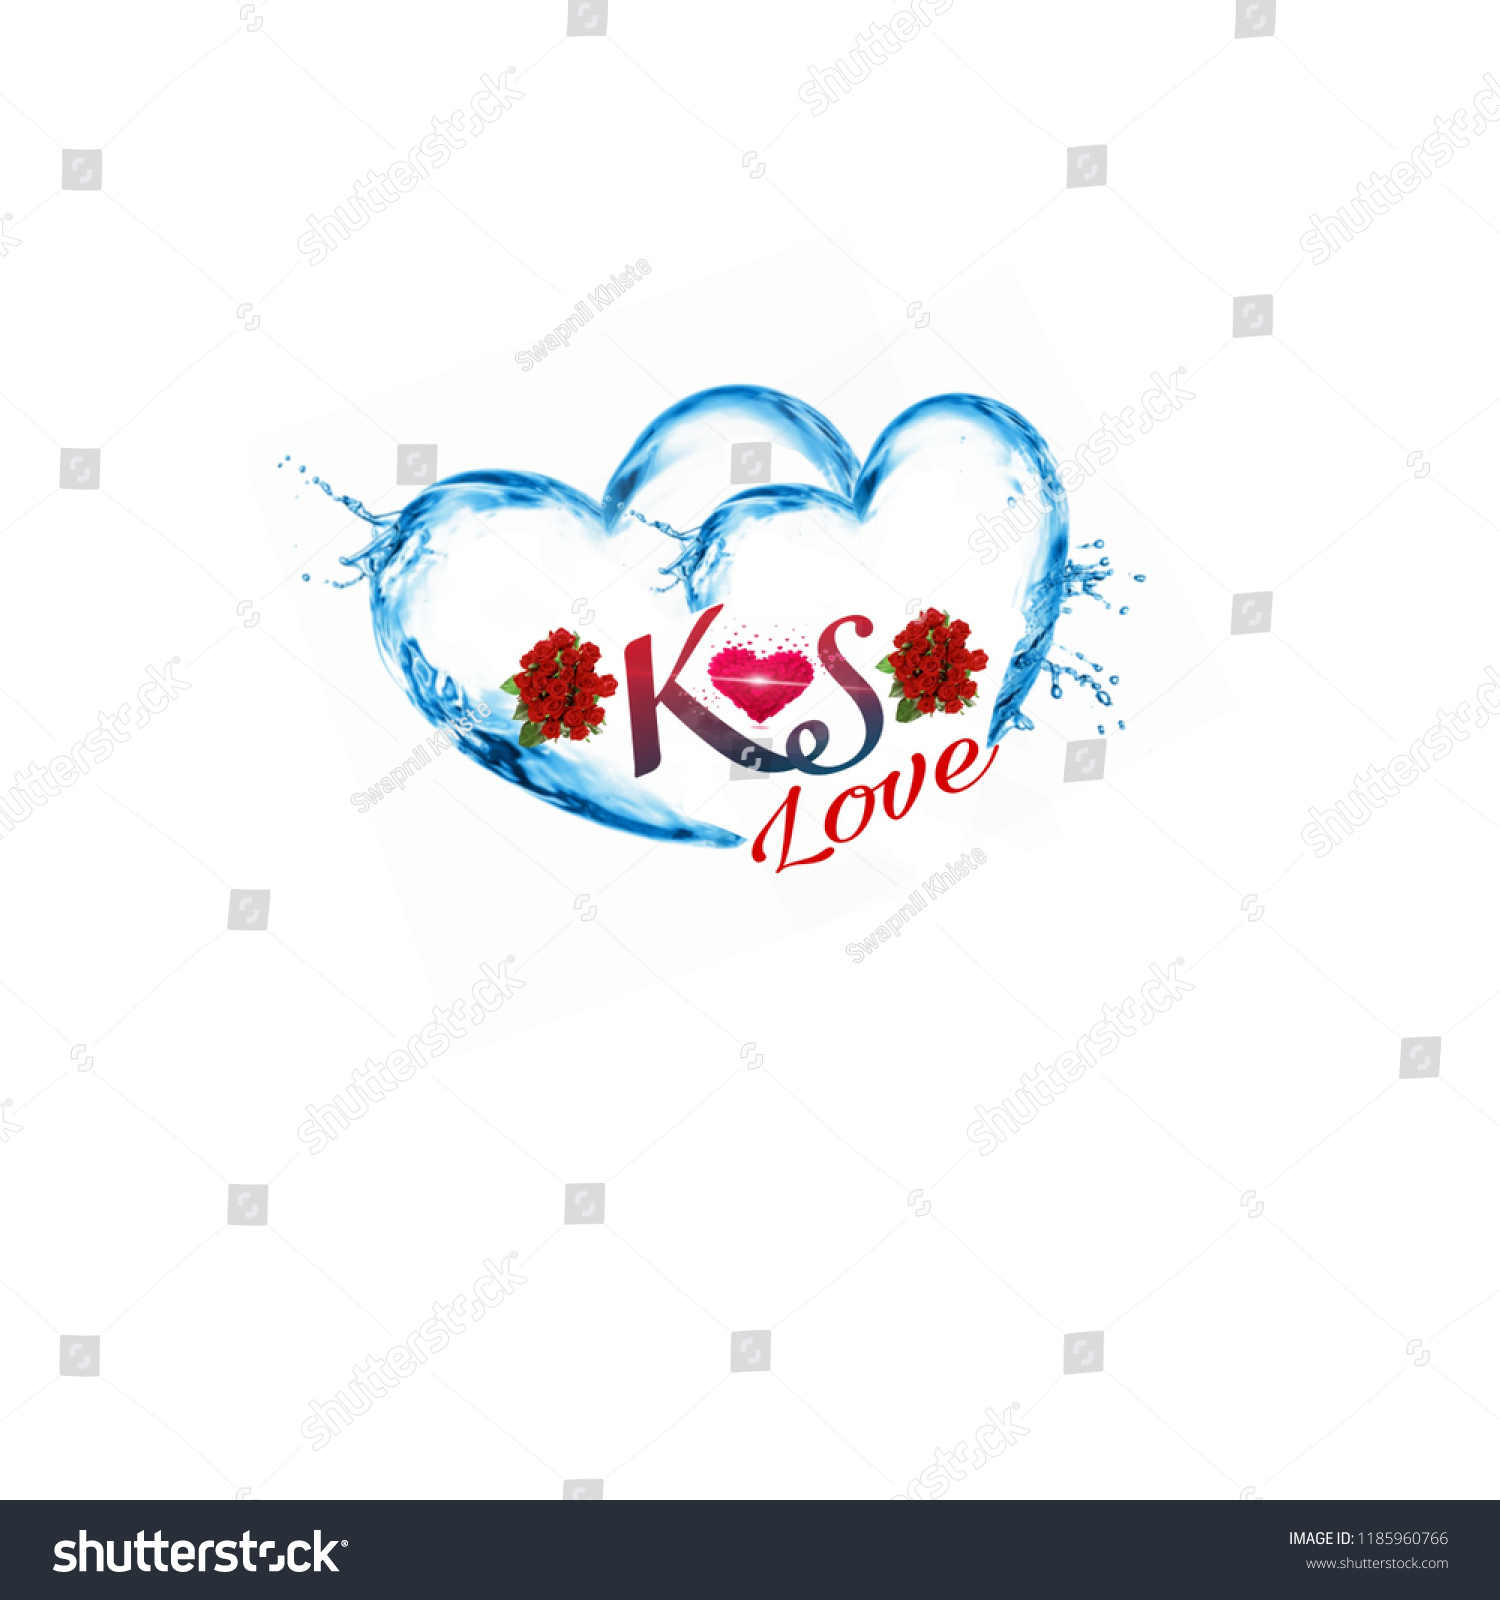  love logo #1185960766